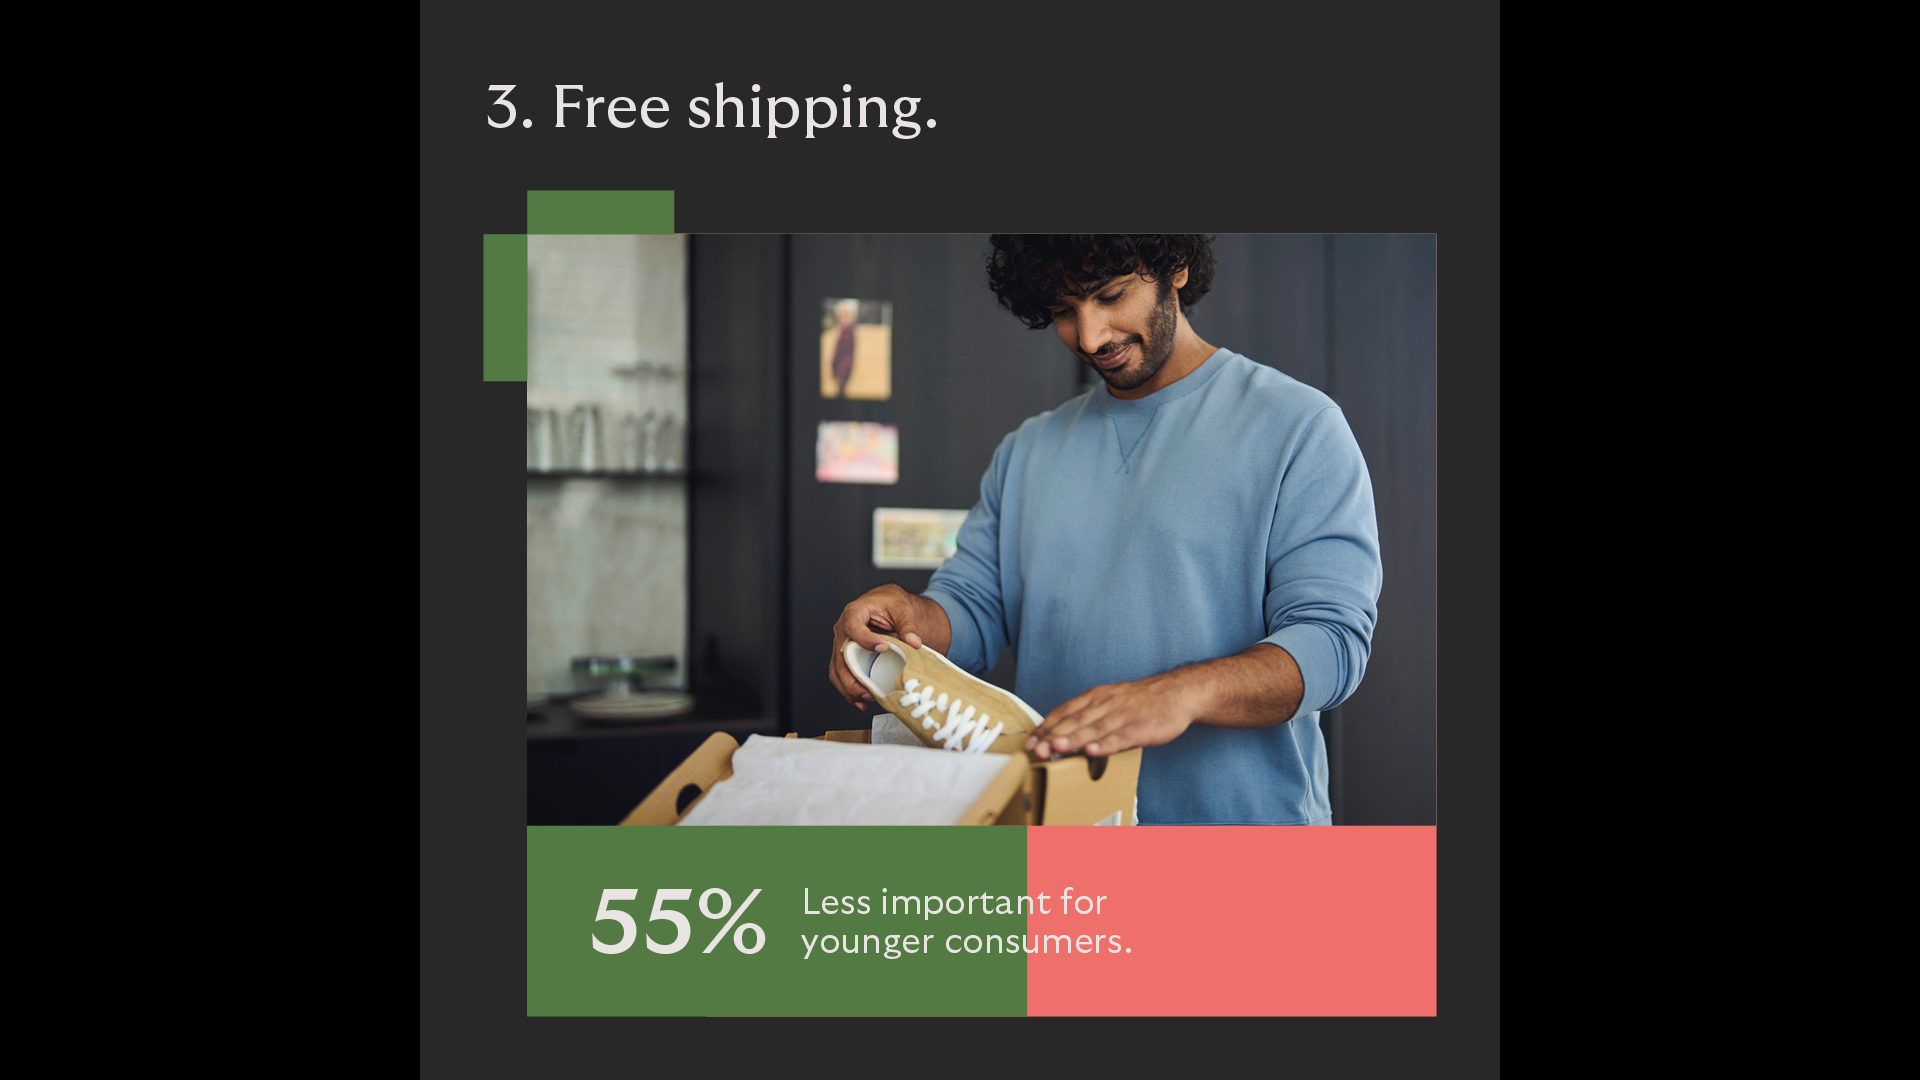 Demand free shipping